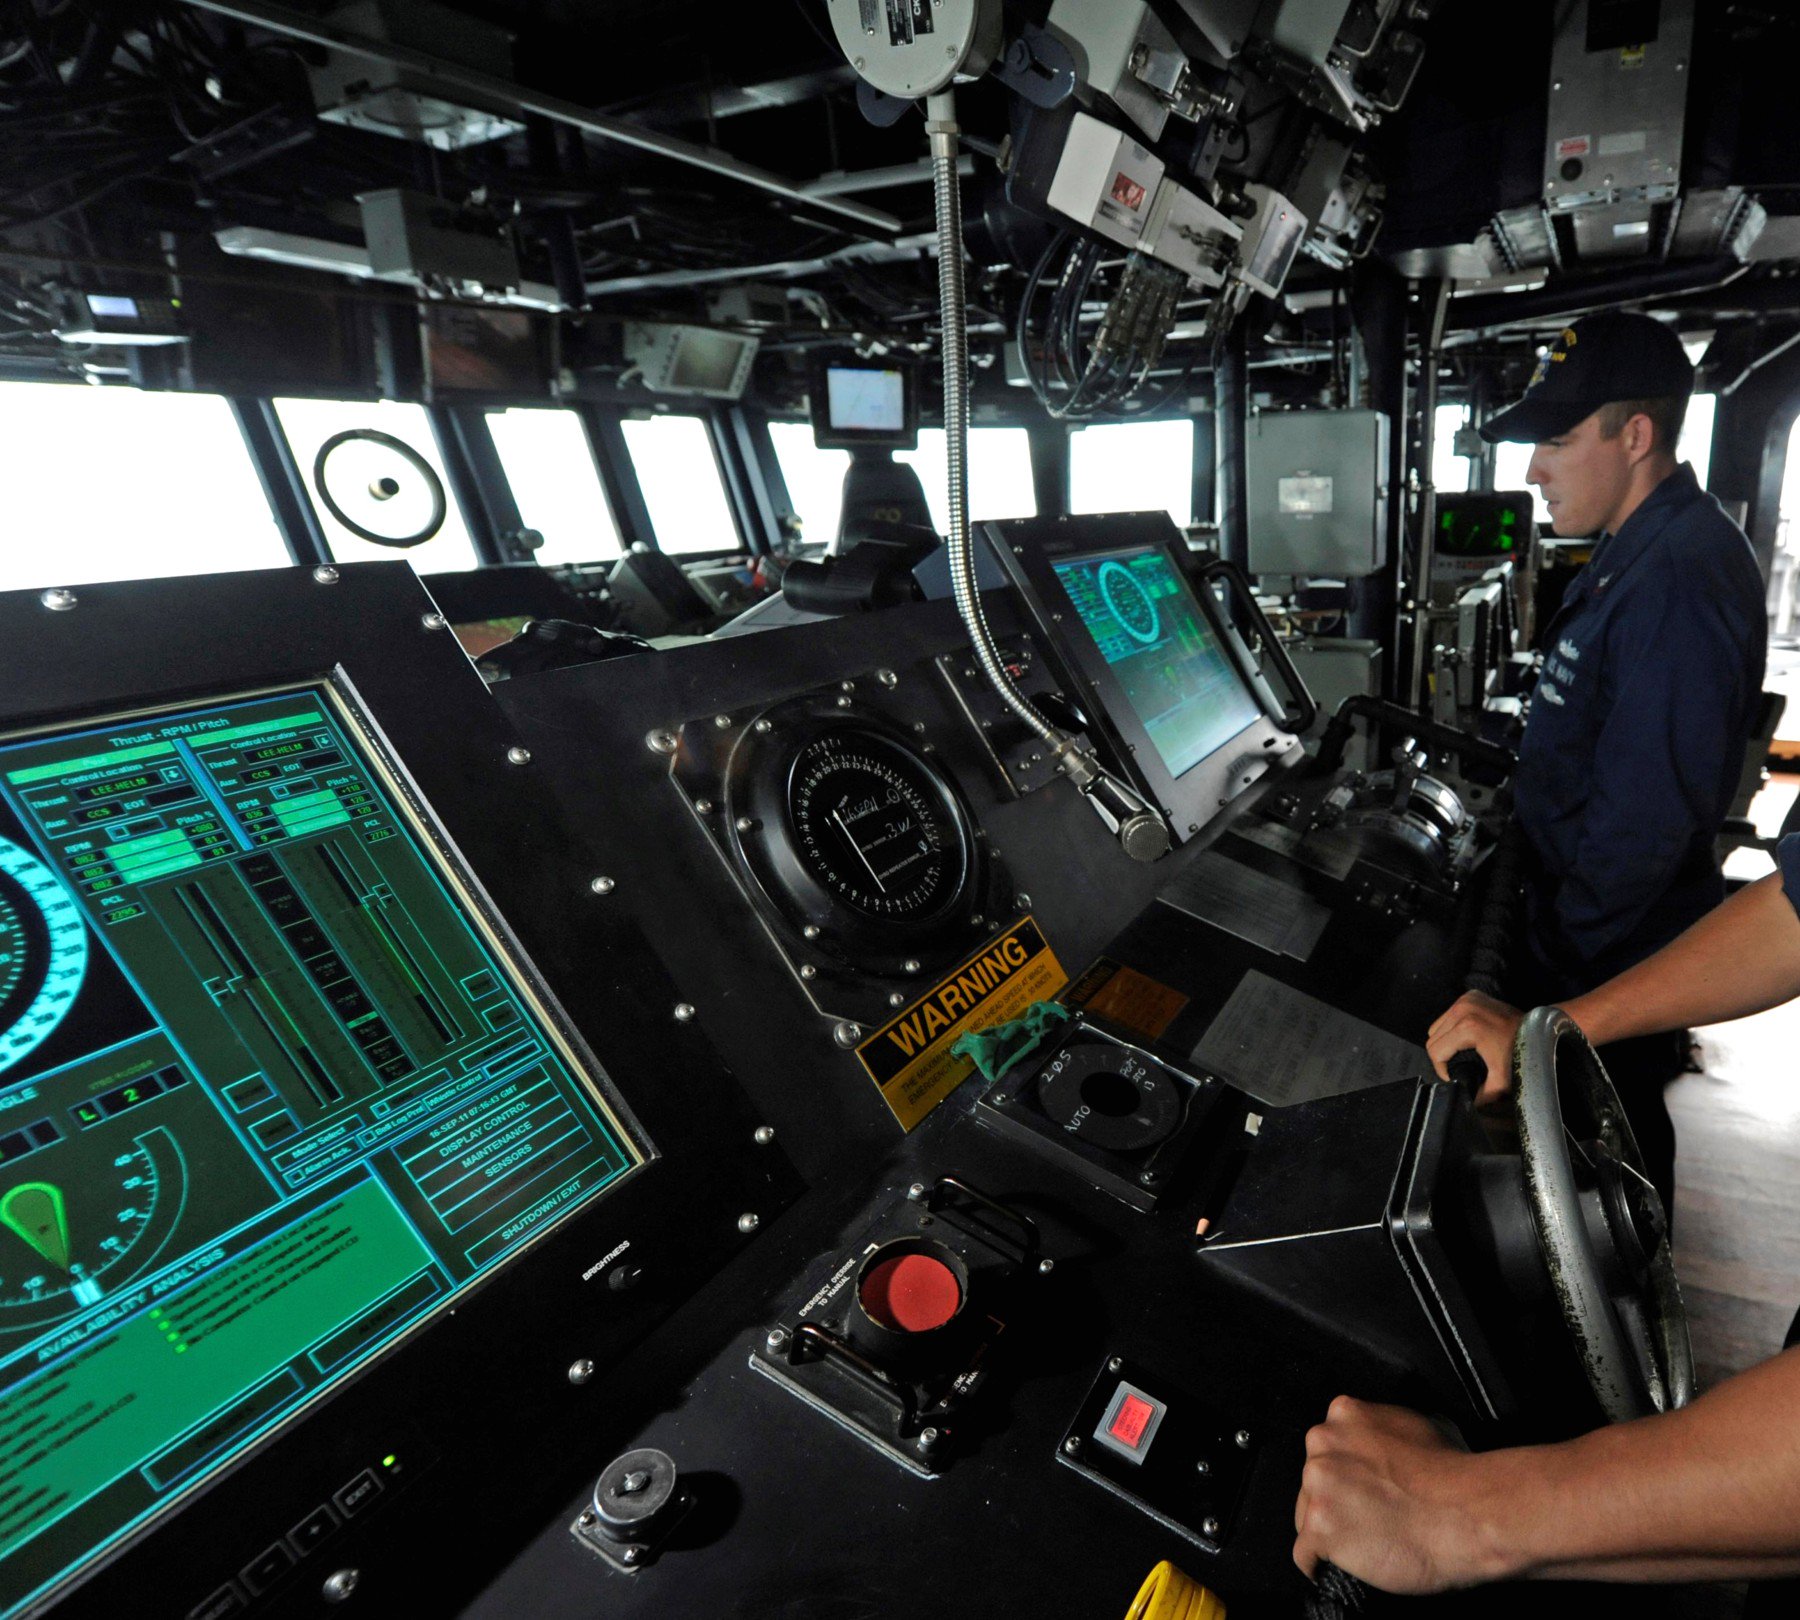 touchscreen helm USS Dewey DDG 105 8x6zv